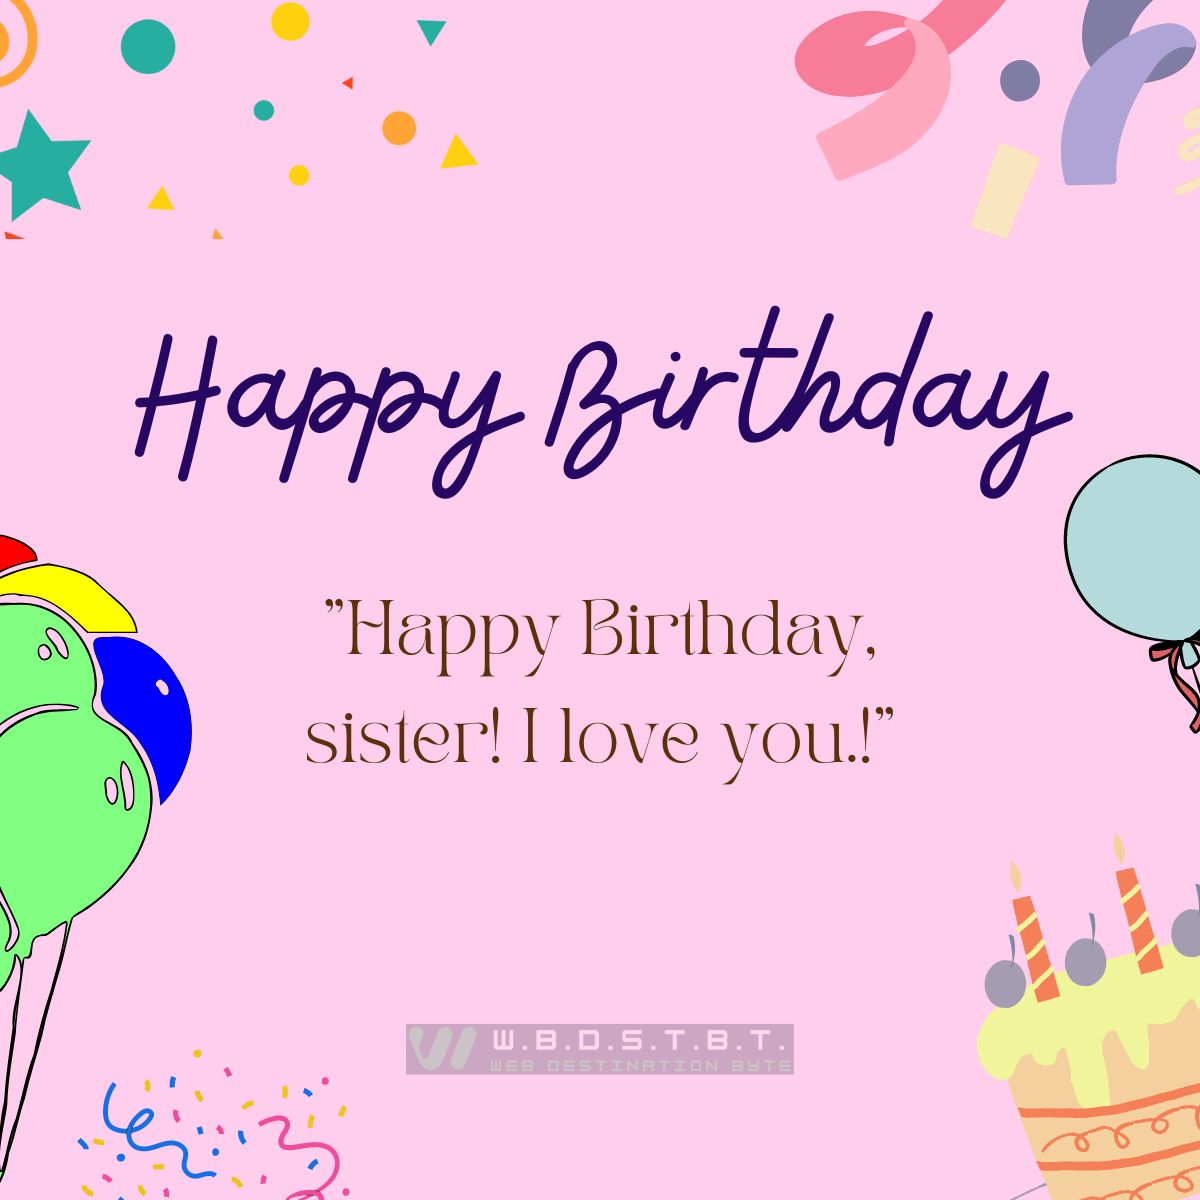 "Happy Birthday, sister! I love you.!"